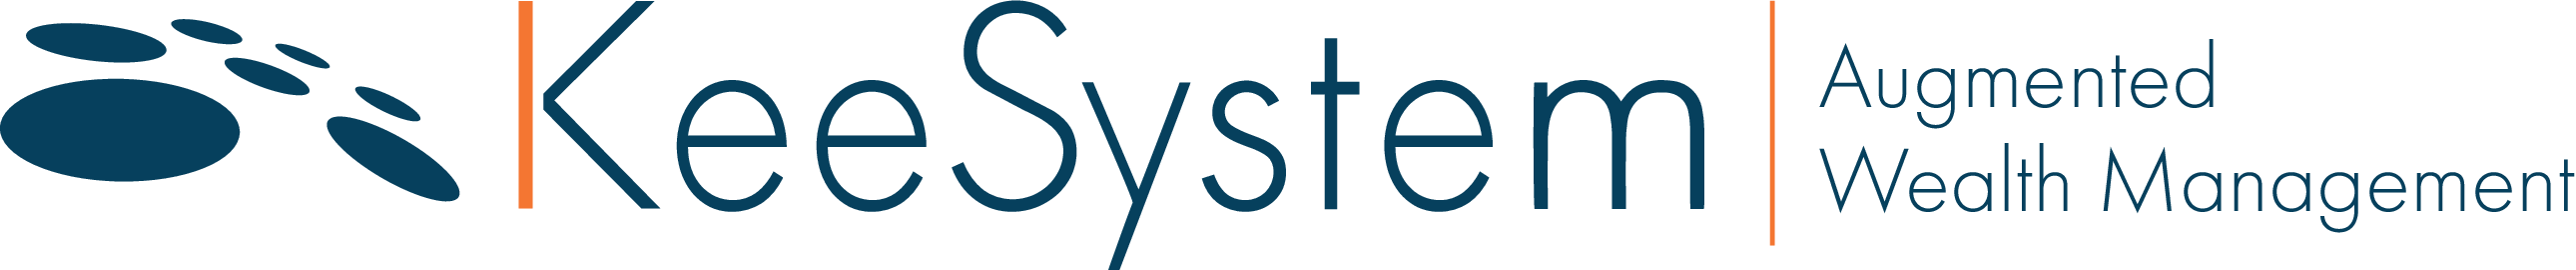 Logo Keesystem SA